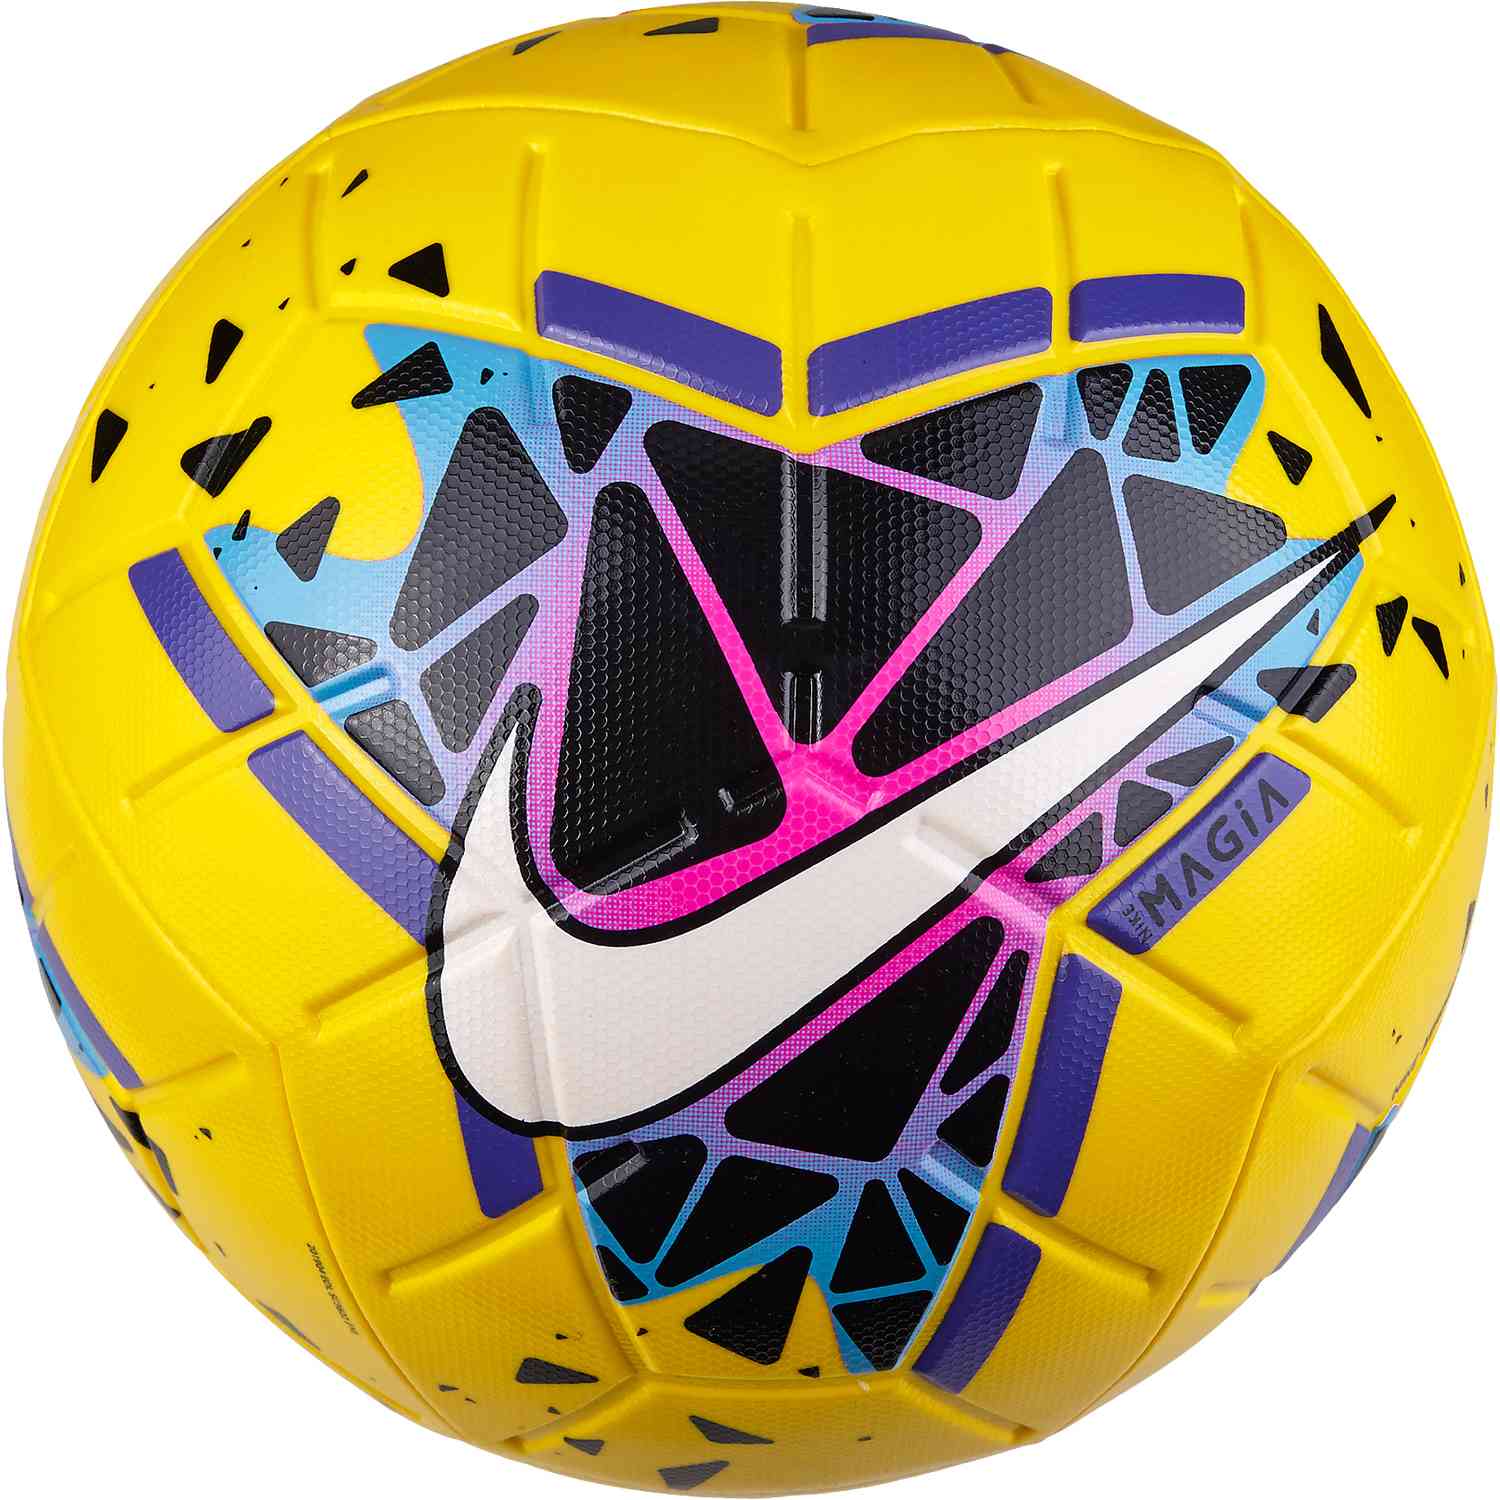 begrijpen Rechtsaf gek Nike Magia Hi-vis Match Soccer Ball - Yellow/Black/Purple - Soccer Master